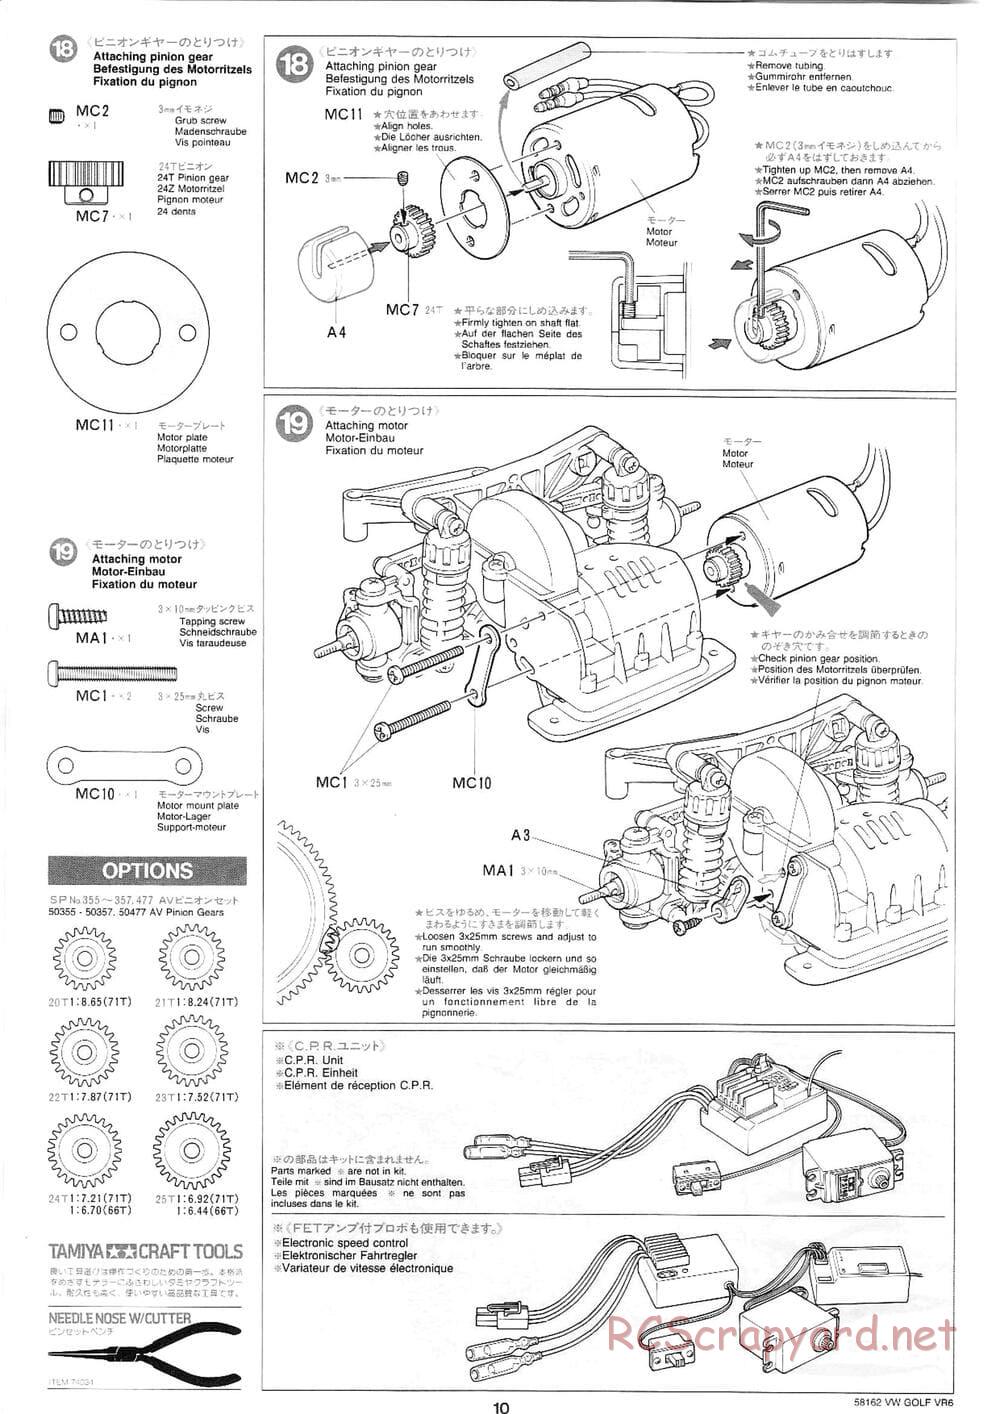 Tamiya - Volkswagen Golf VR6 - FF-01 Chassis - Manual - Page 10